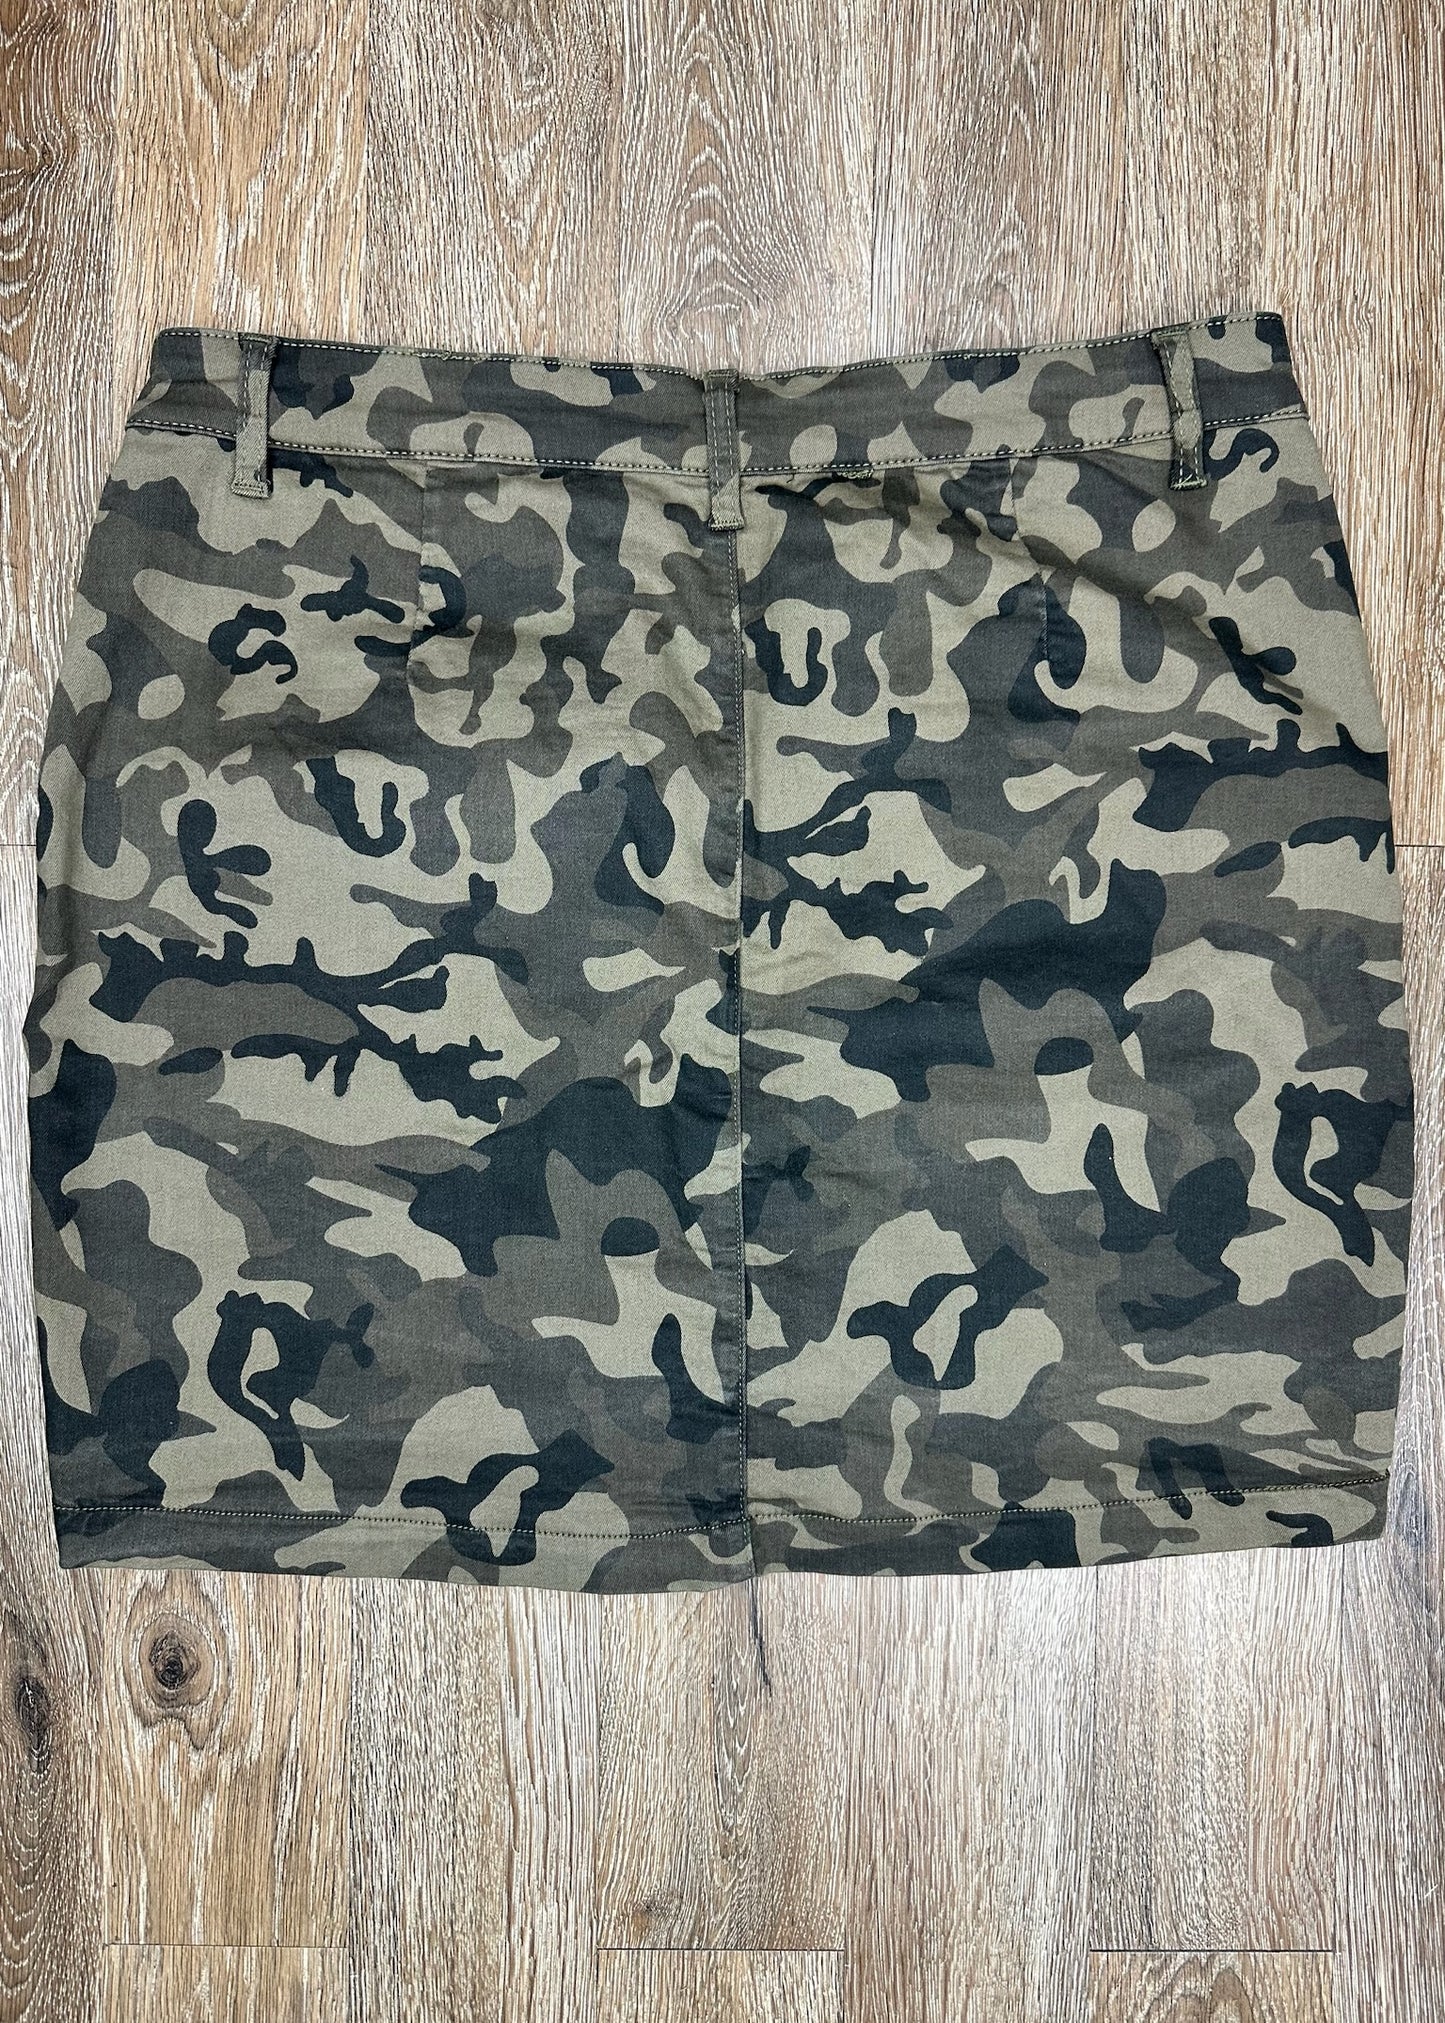 Army Fatigue Zipper Skirt by Fashion Nova